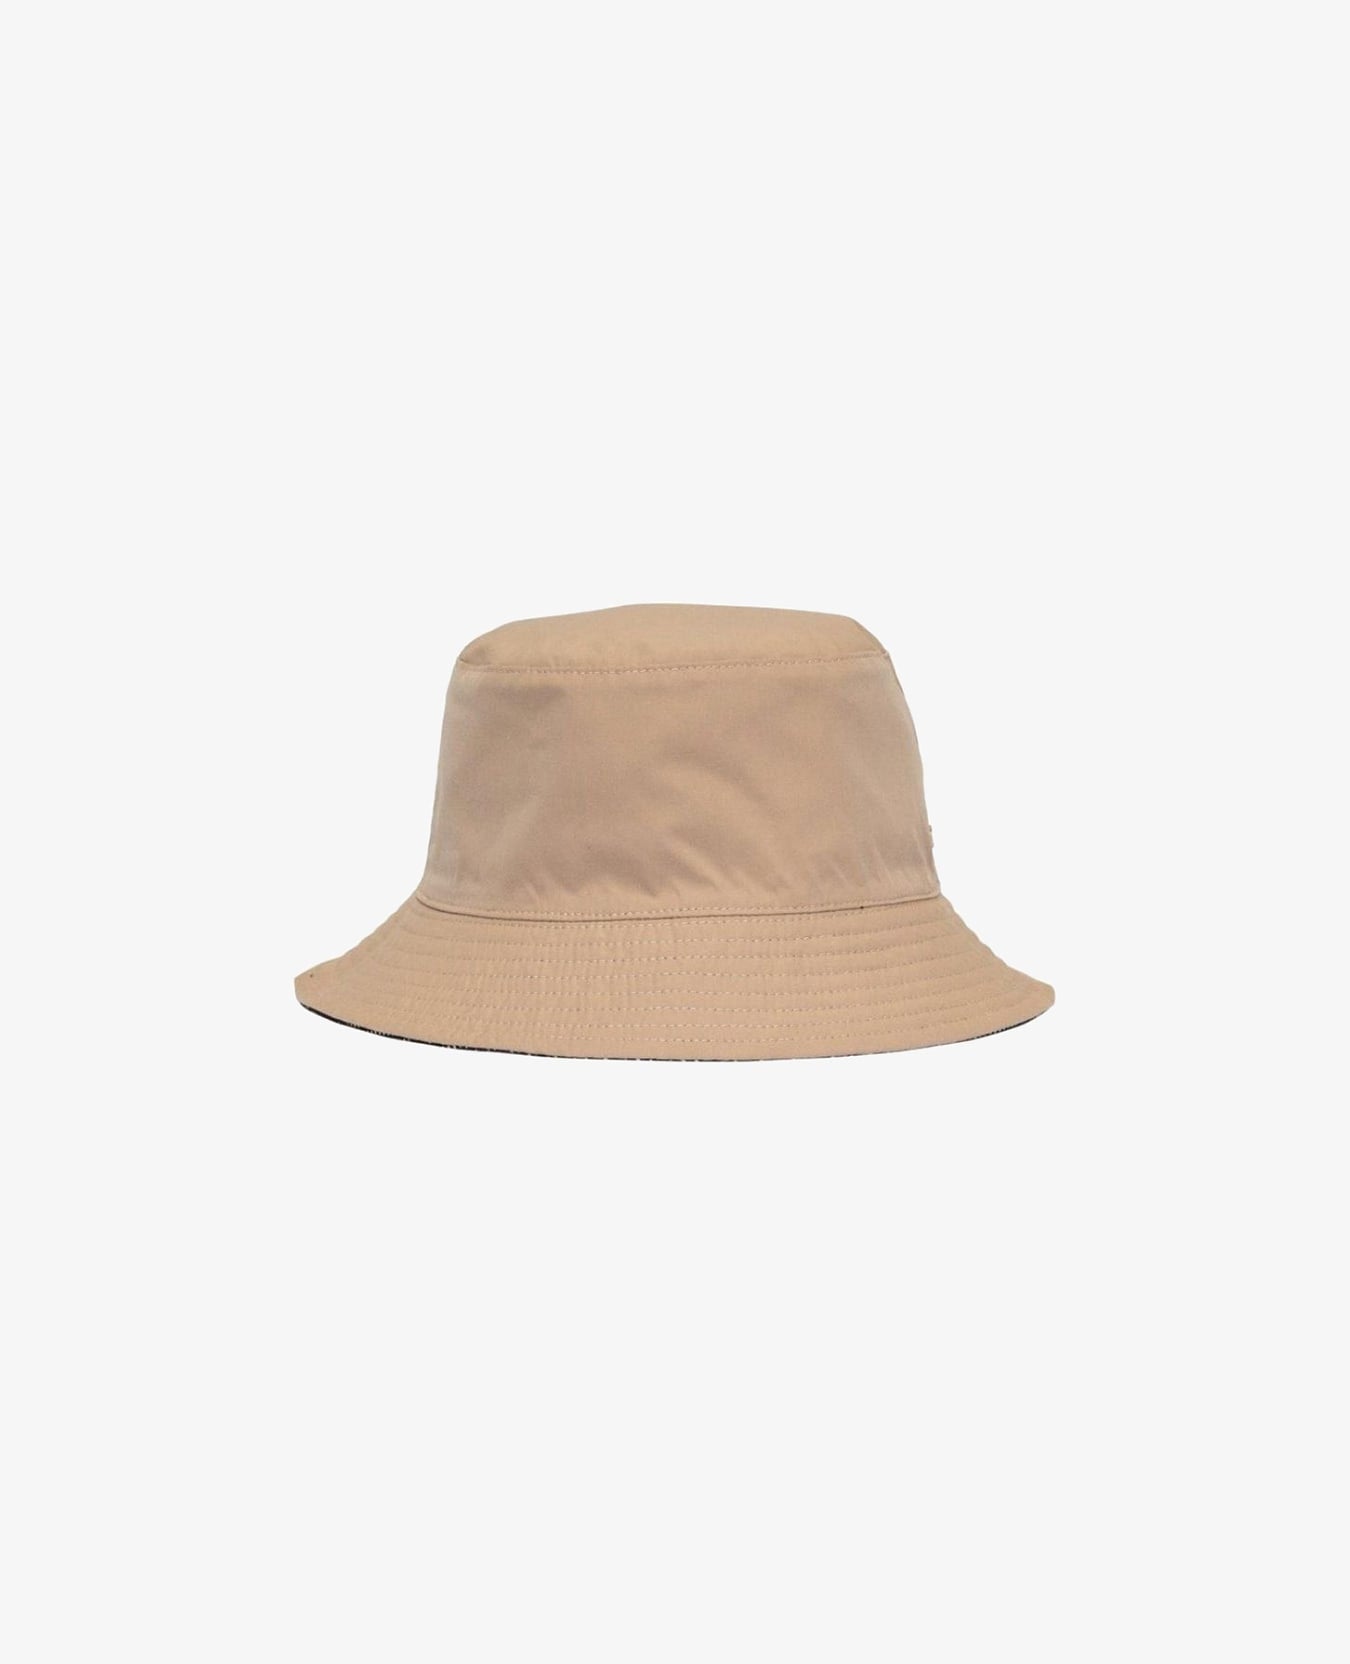 UMBORA HATS